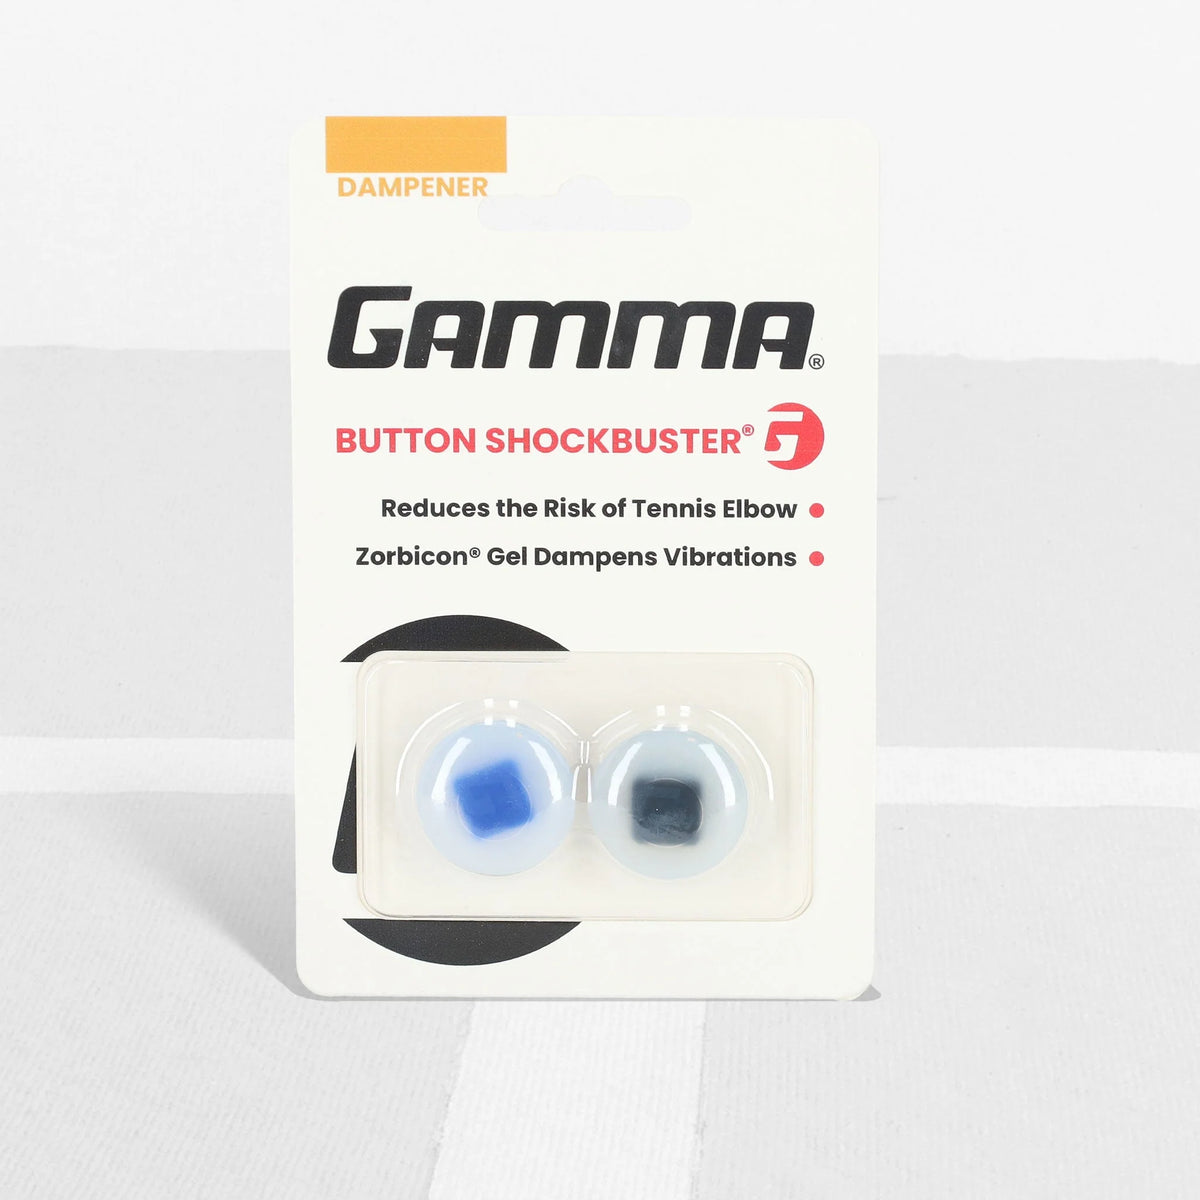 Gamma Shockbuster® Button Tennis Dampener